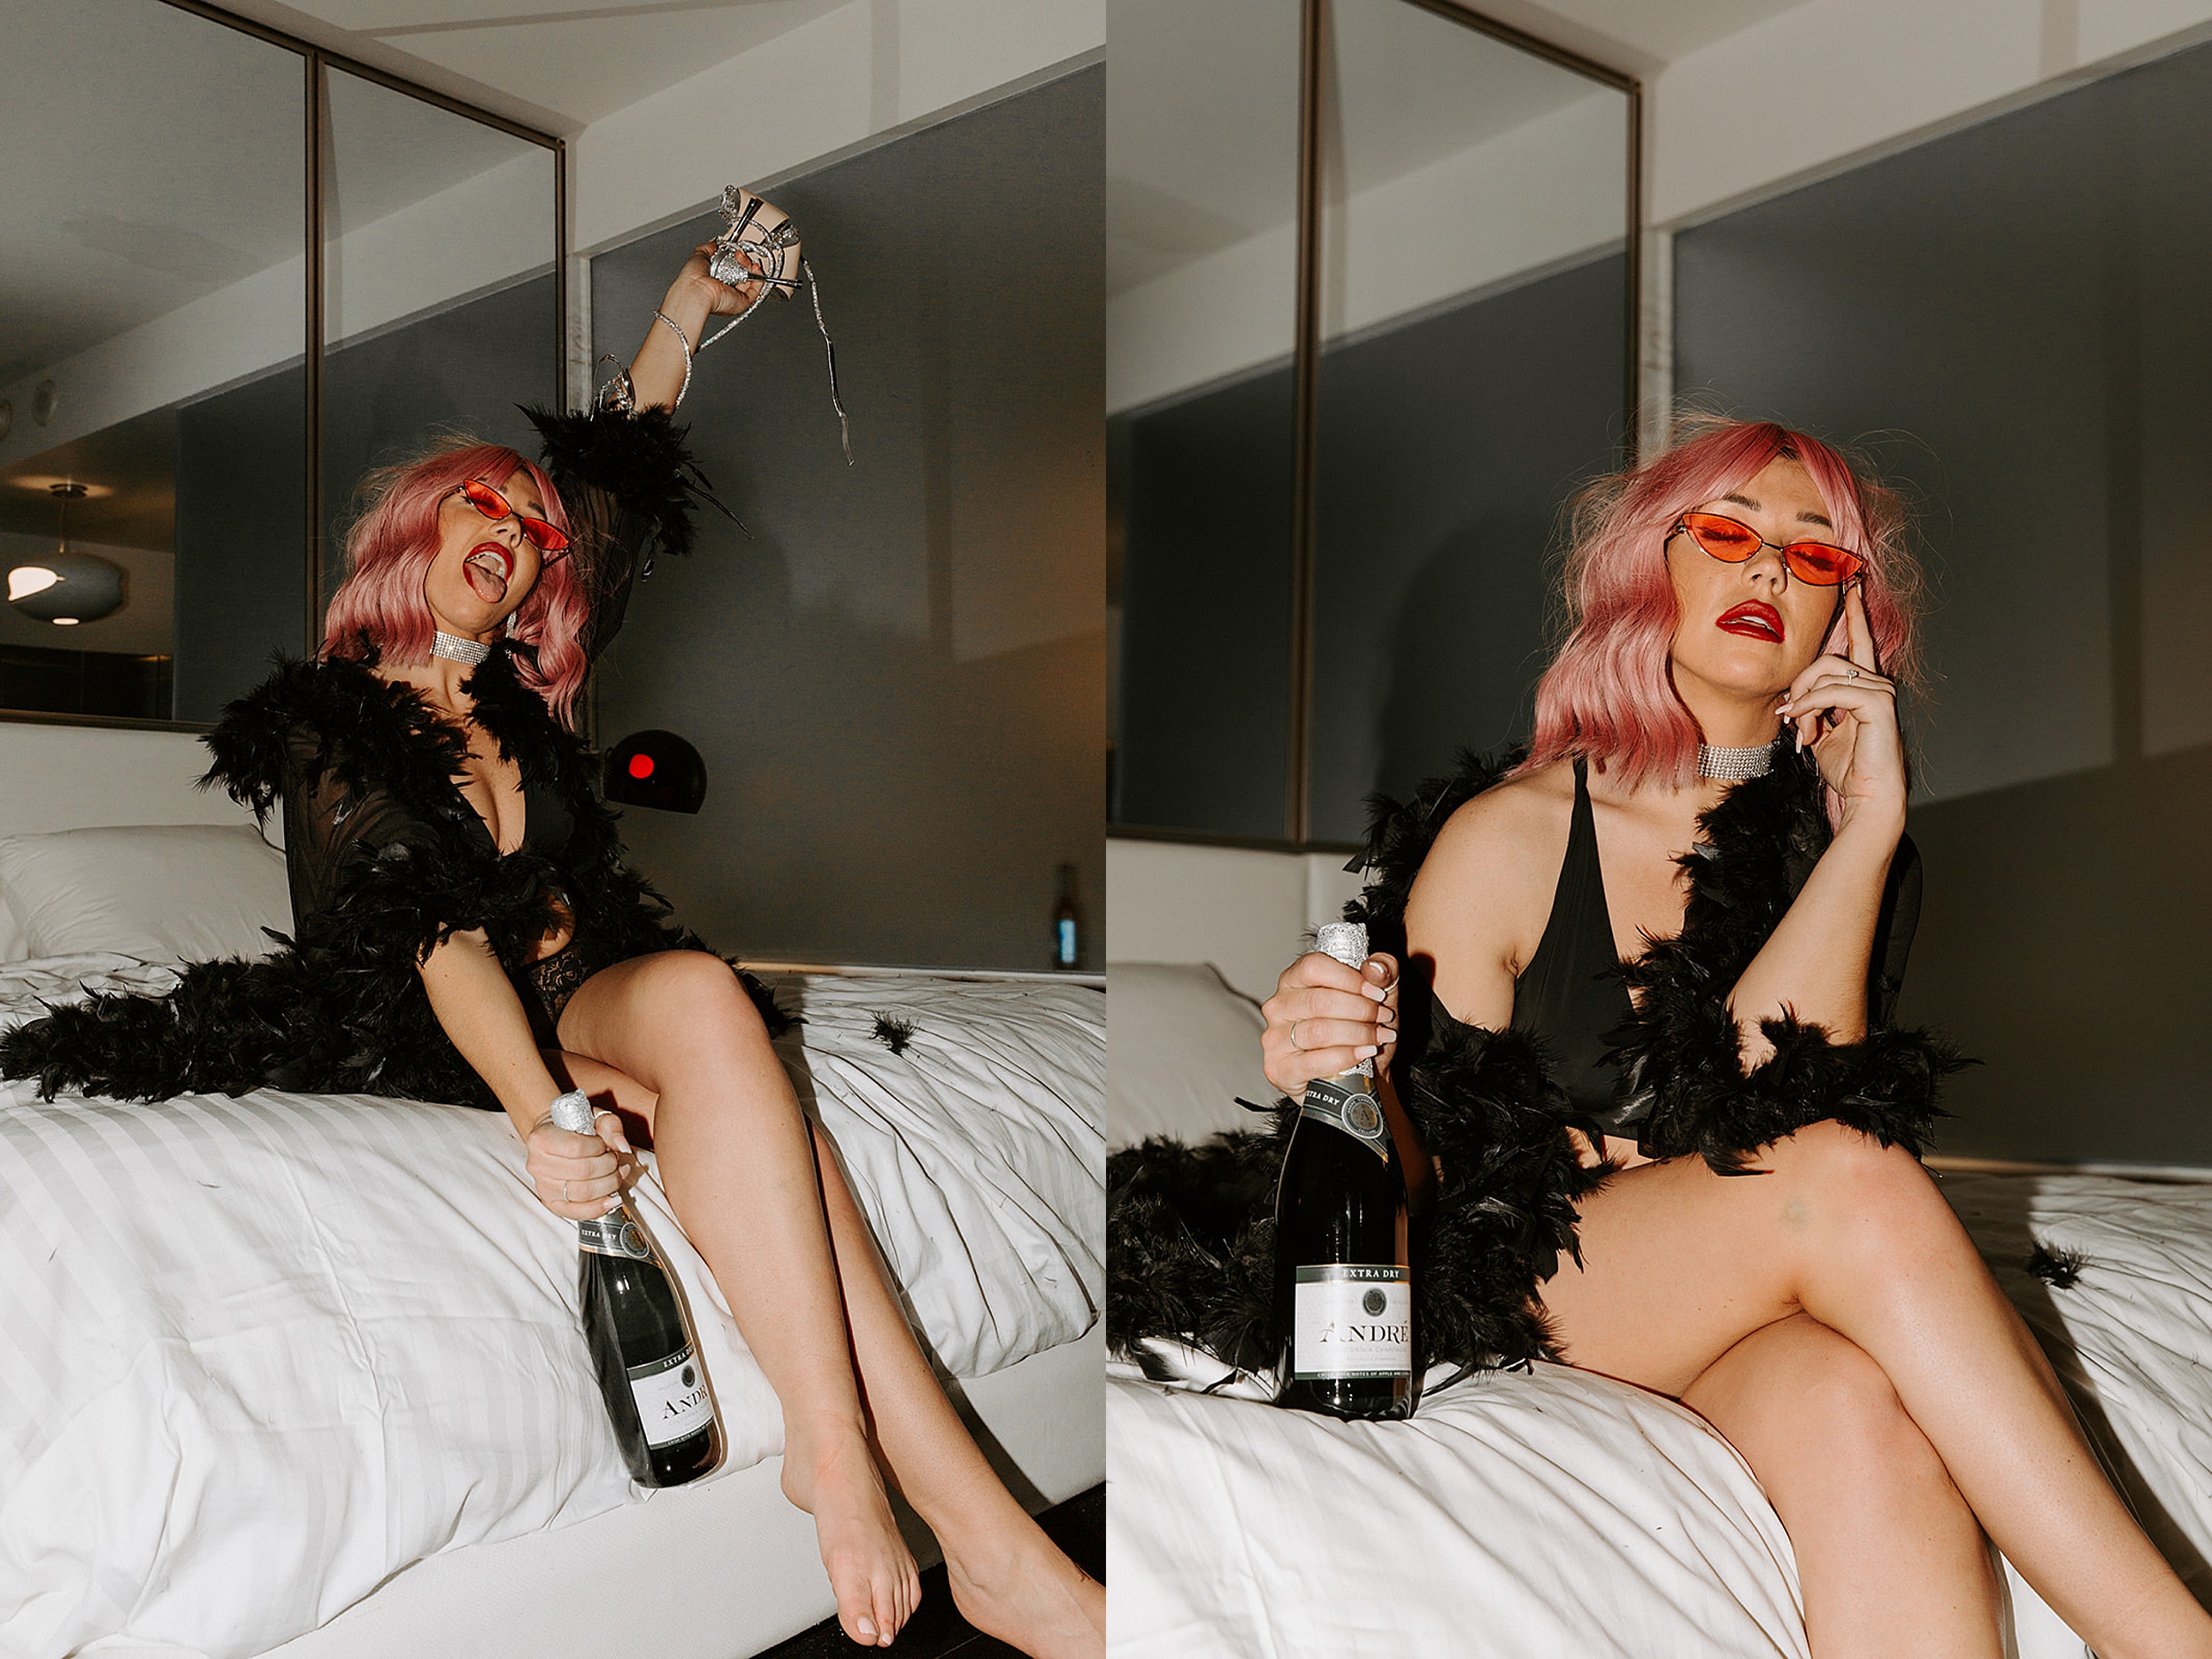 girl sitting on hotel bed in lingerie